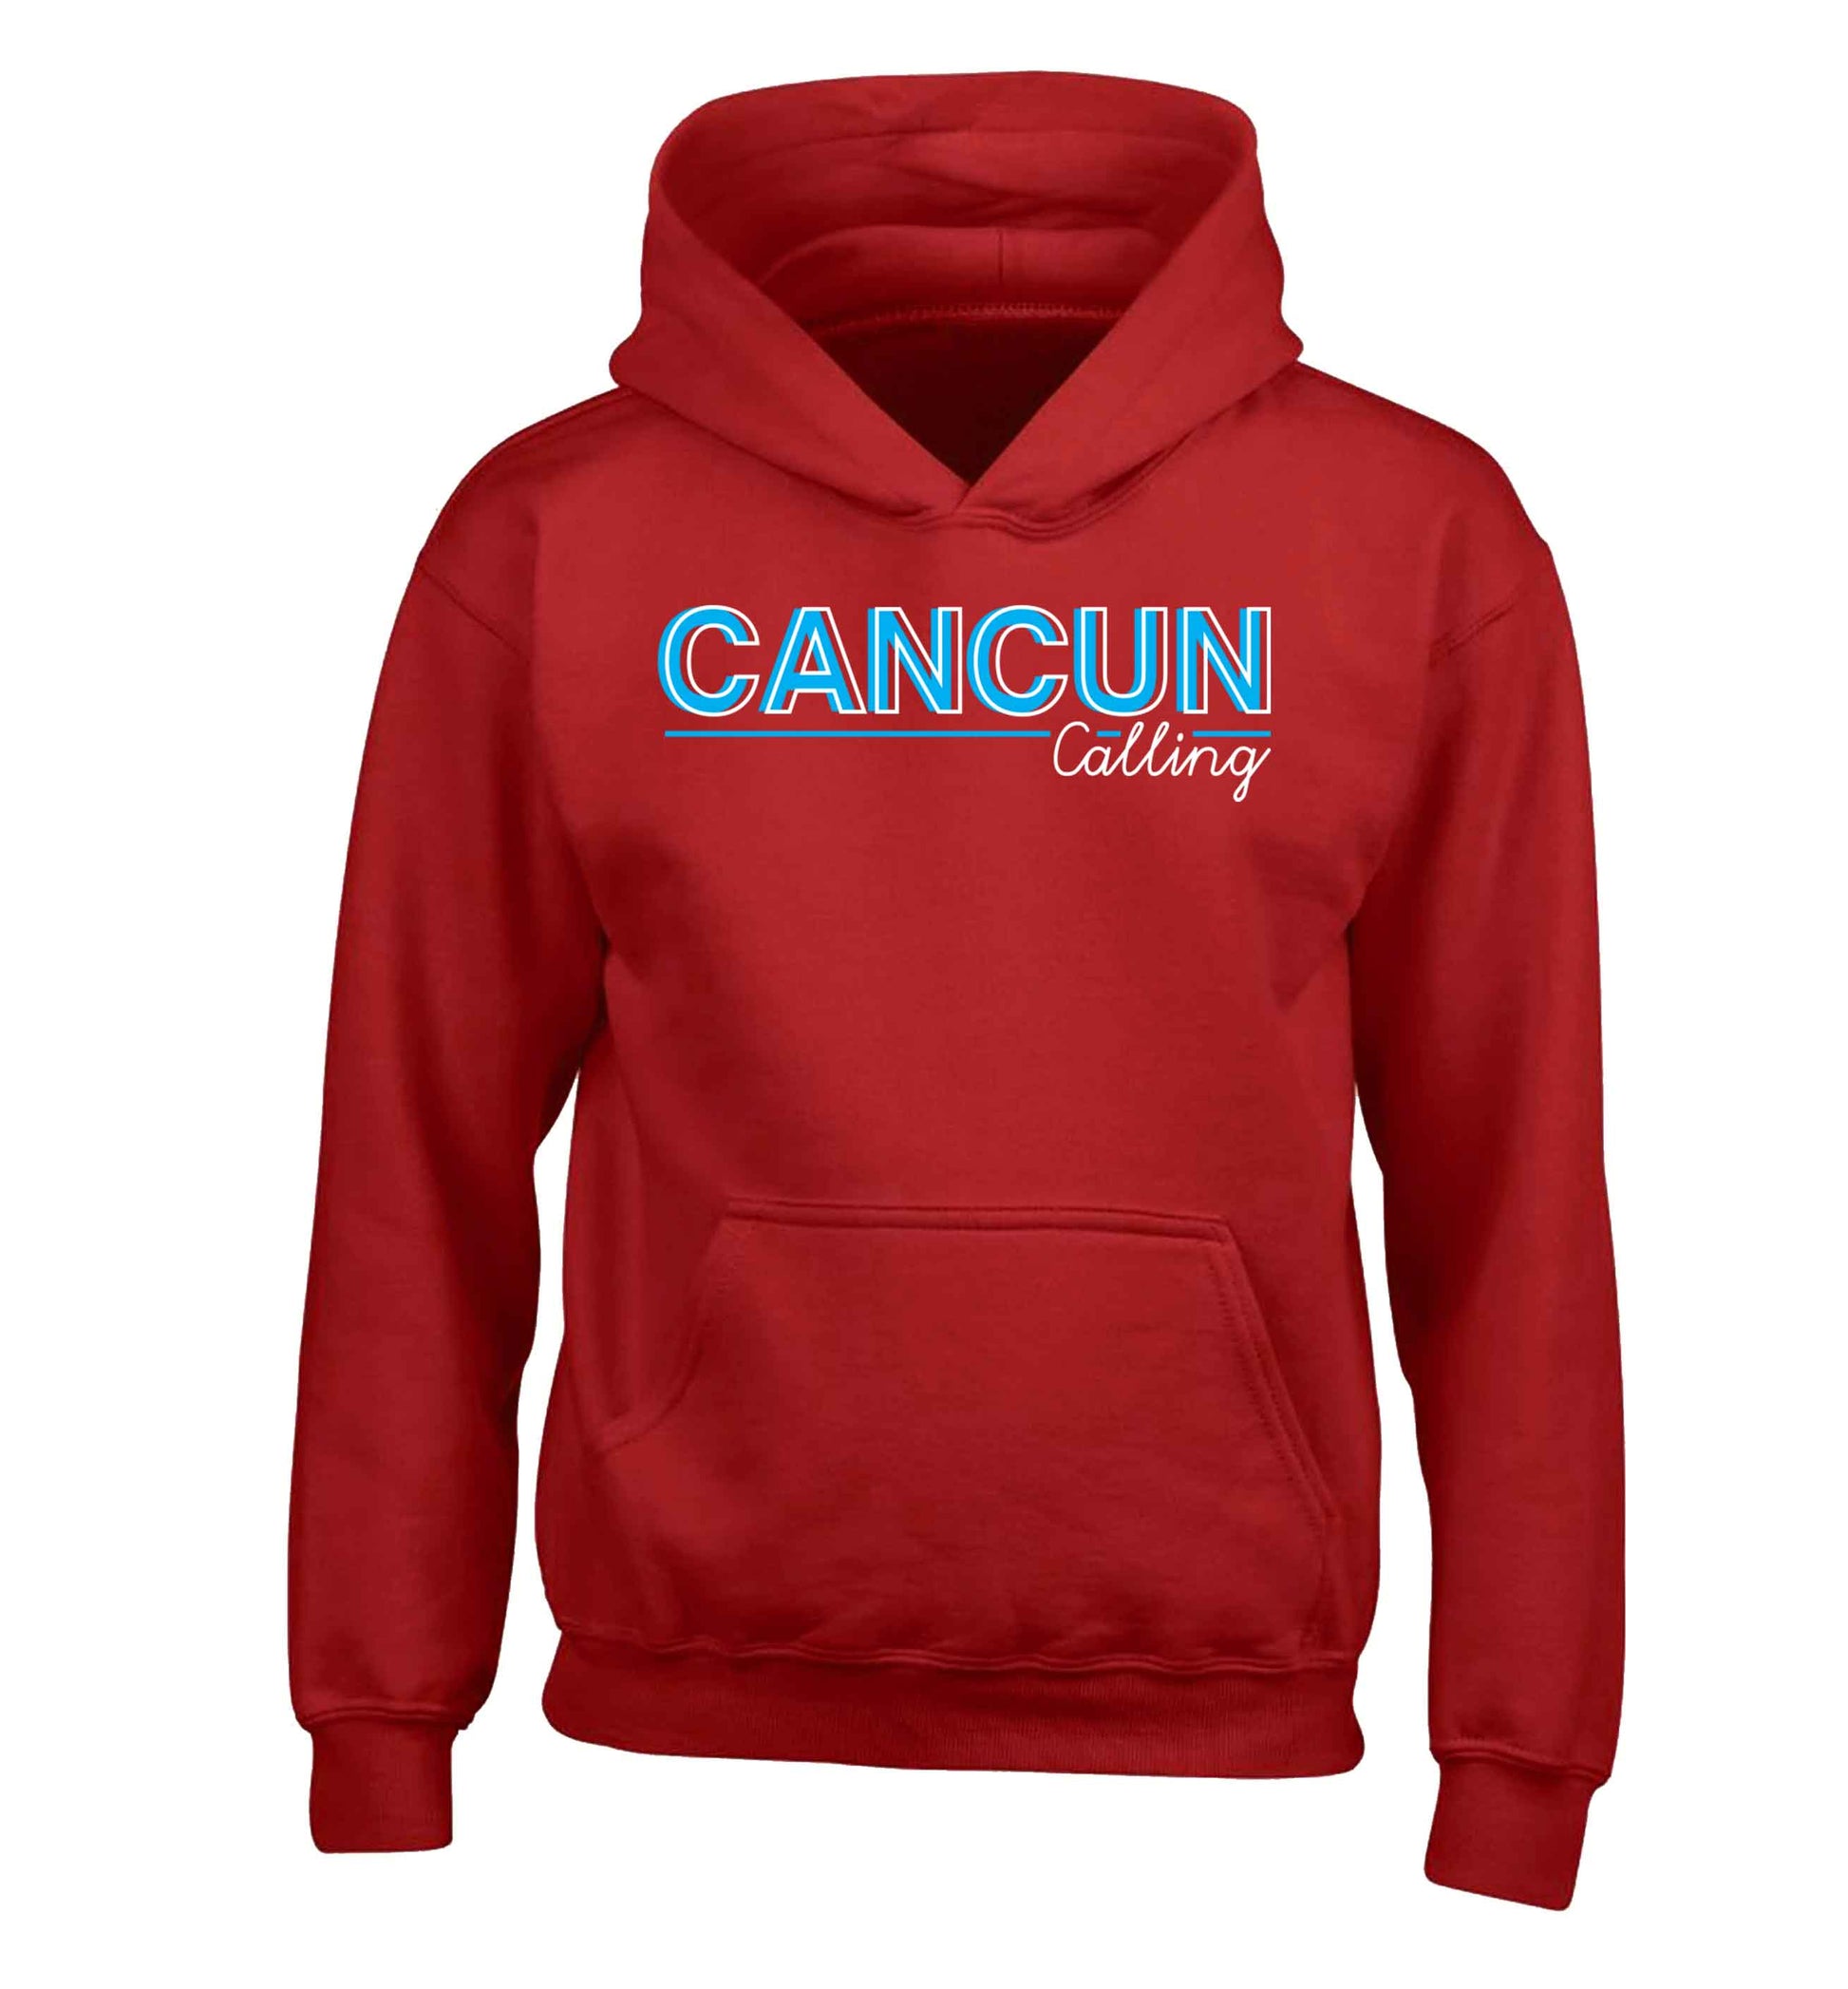 Cancun calling children's red hoodie 12-13 Years